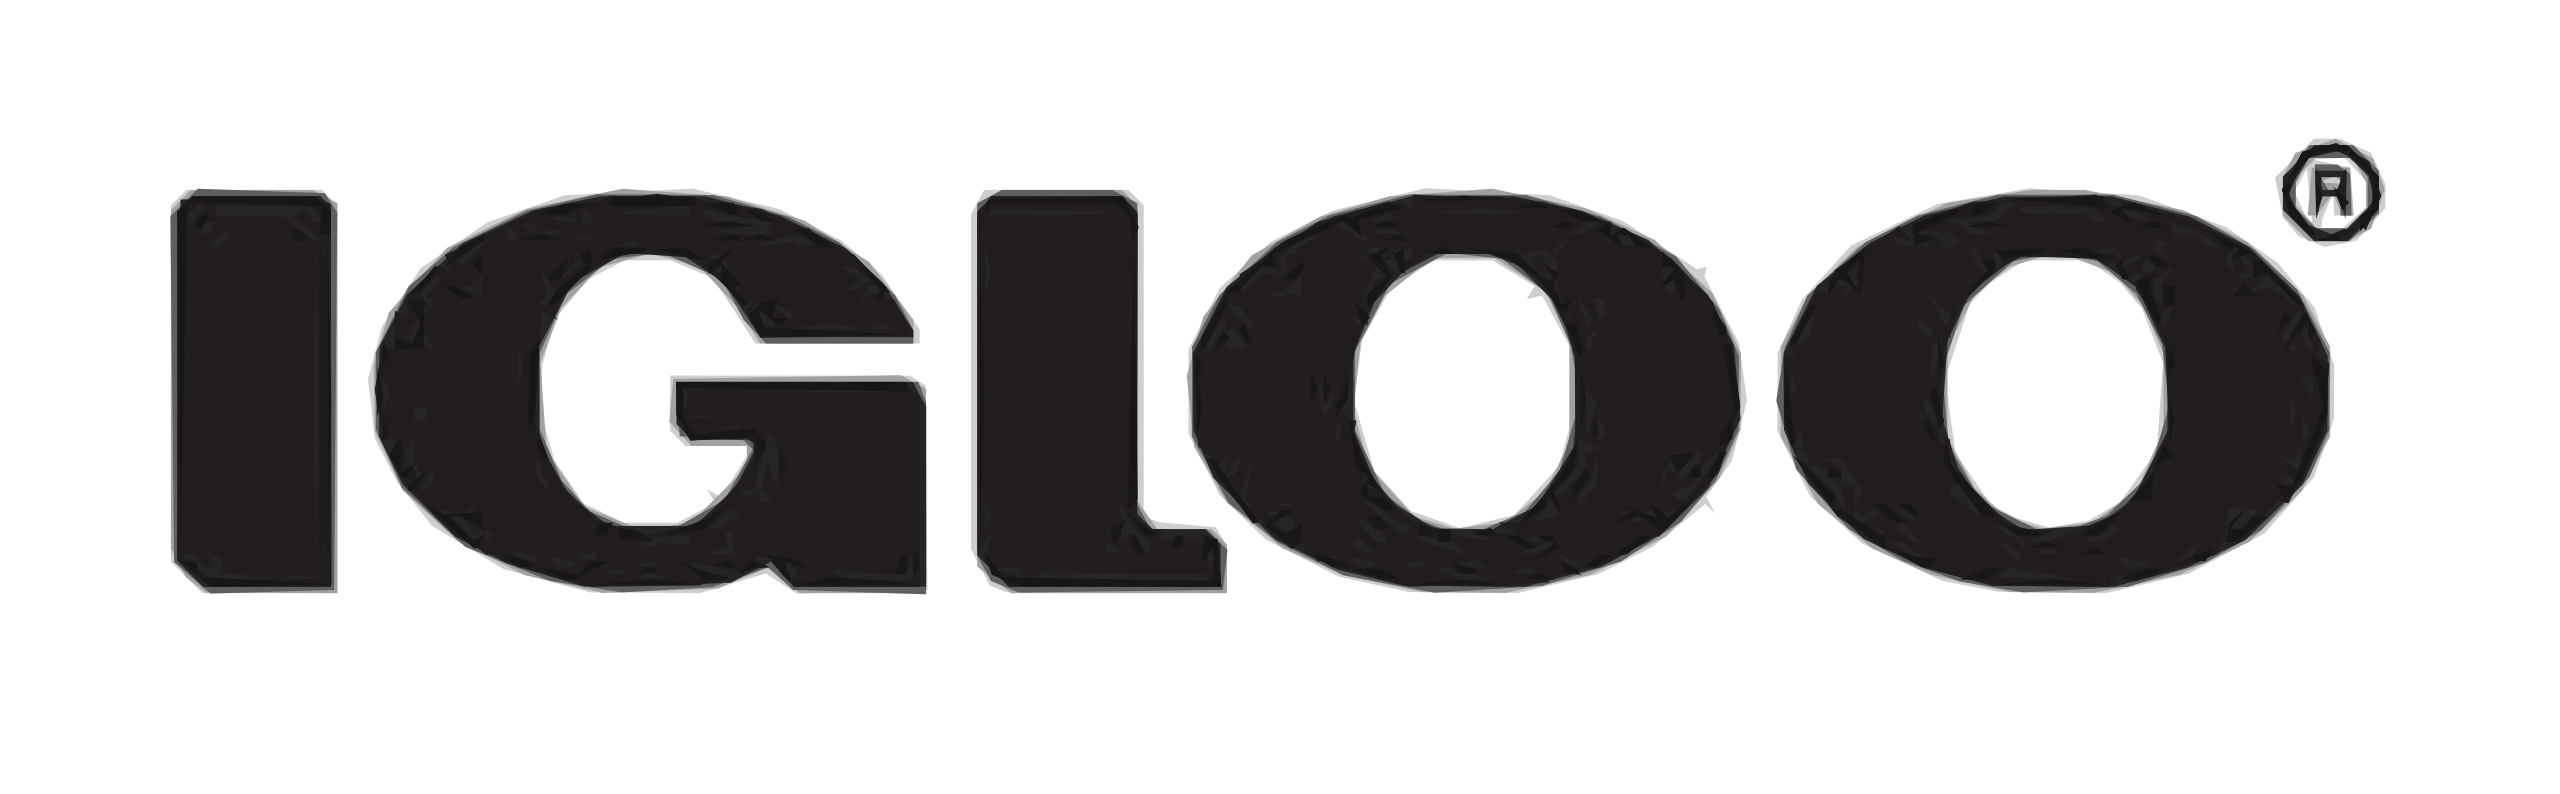 File:Igloo Coolers logo.svg - Wikimedia Commons